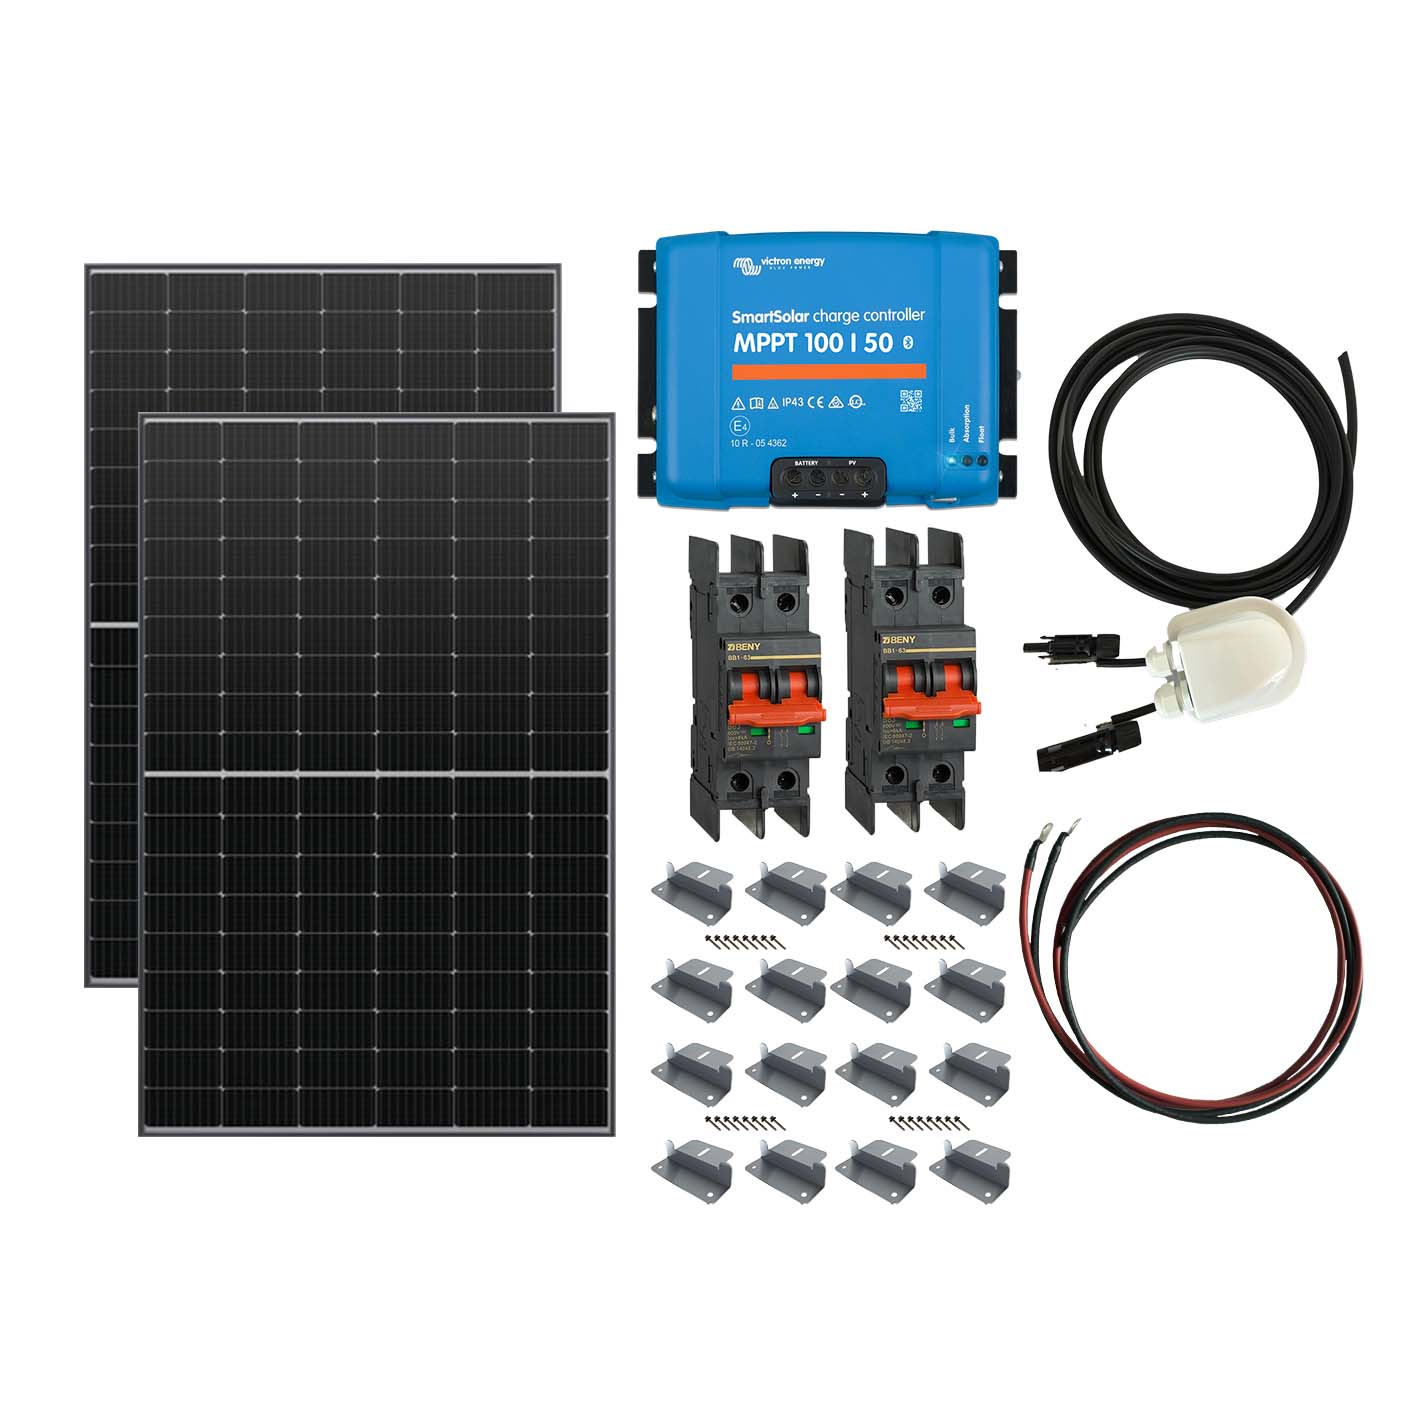 12V solar panels charging kits for caravans, motorhomes, boats